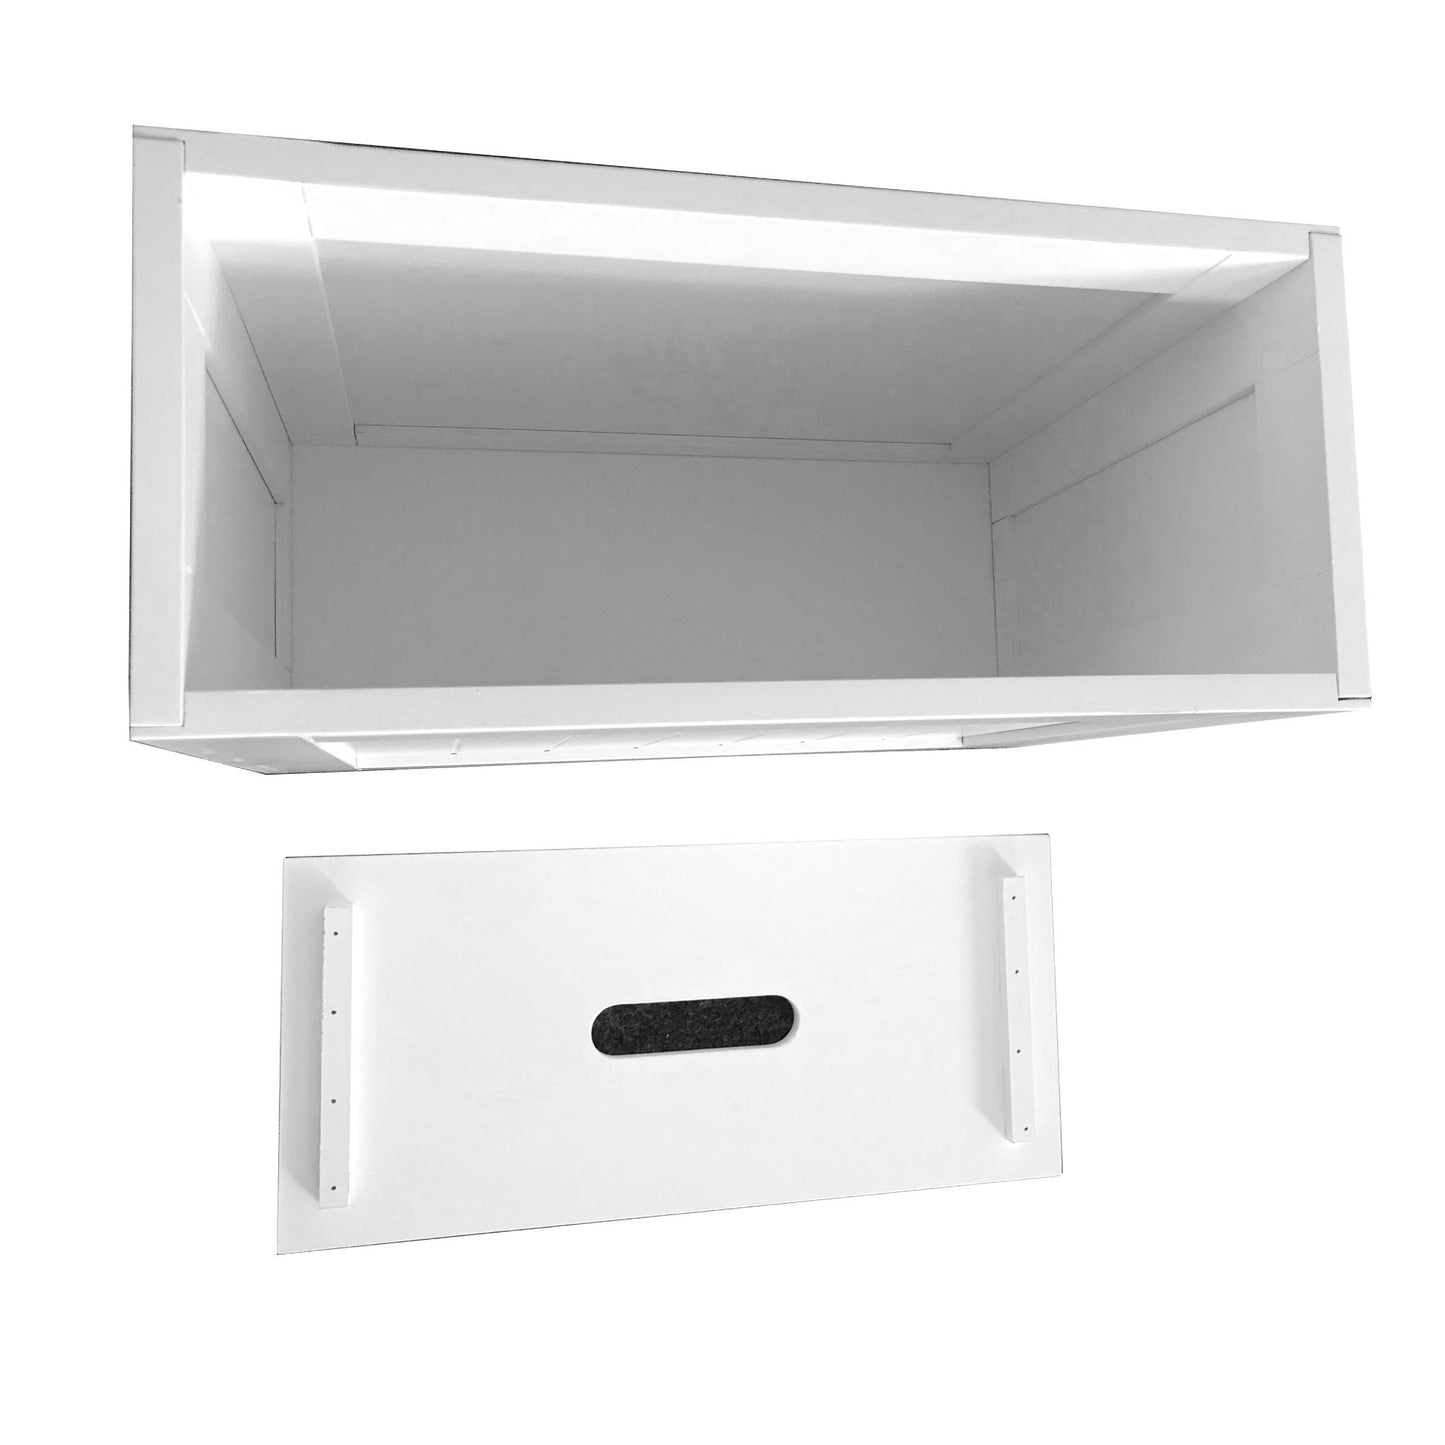 Lewis's 1 Draw and 1 Door Cabinet Home Living Essentials Storage